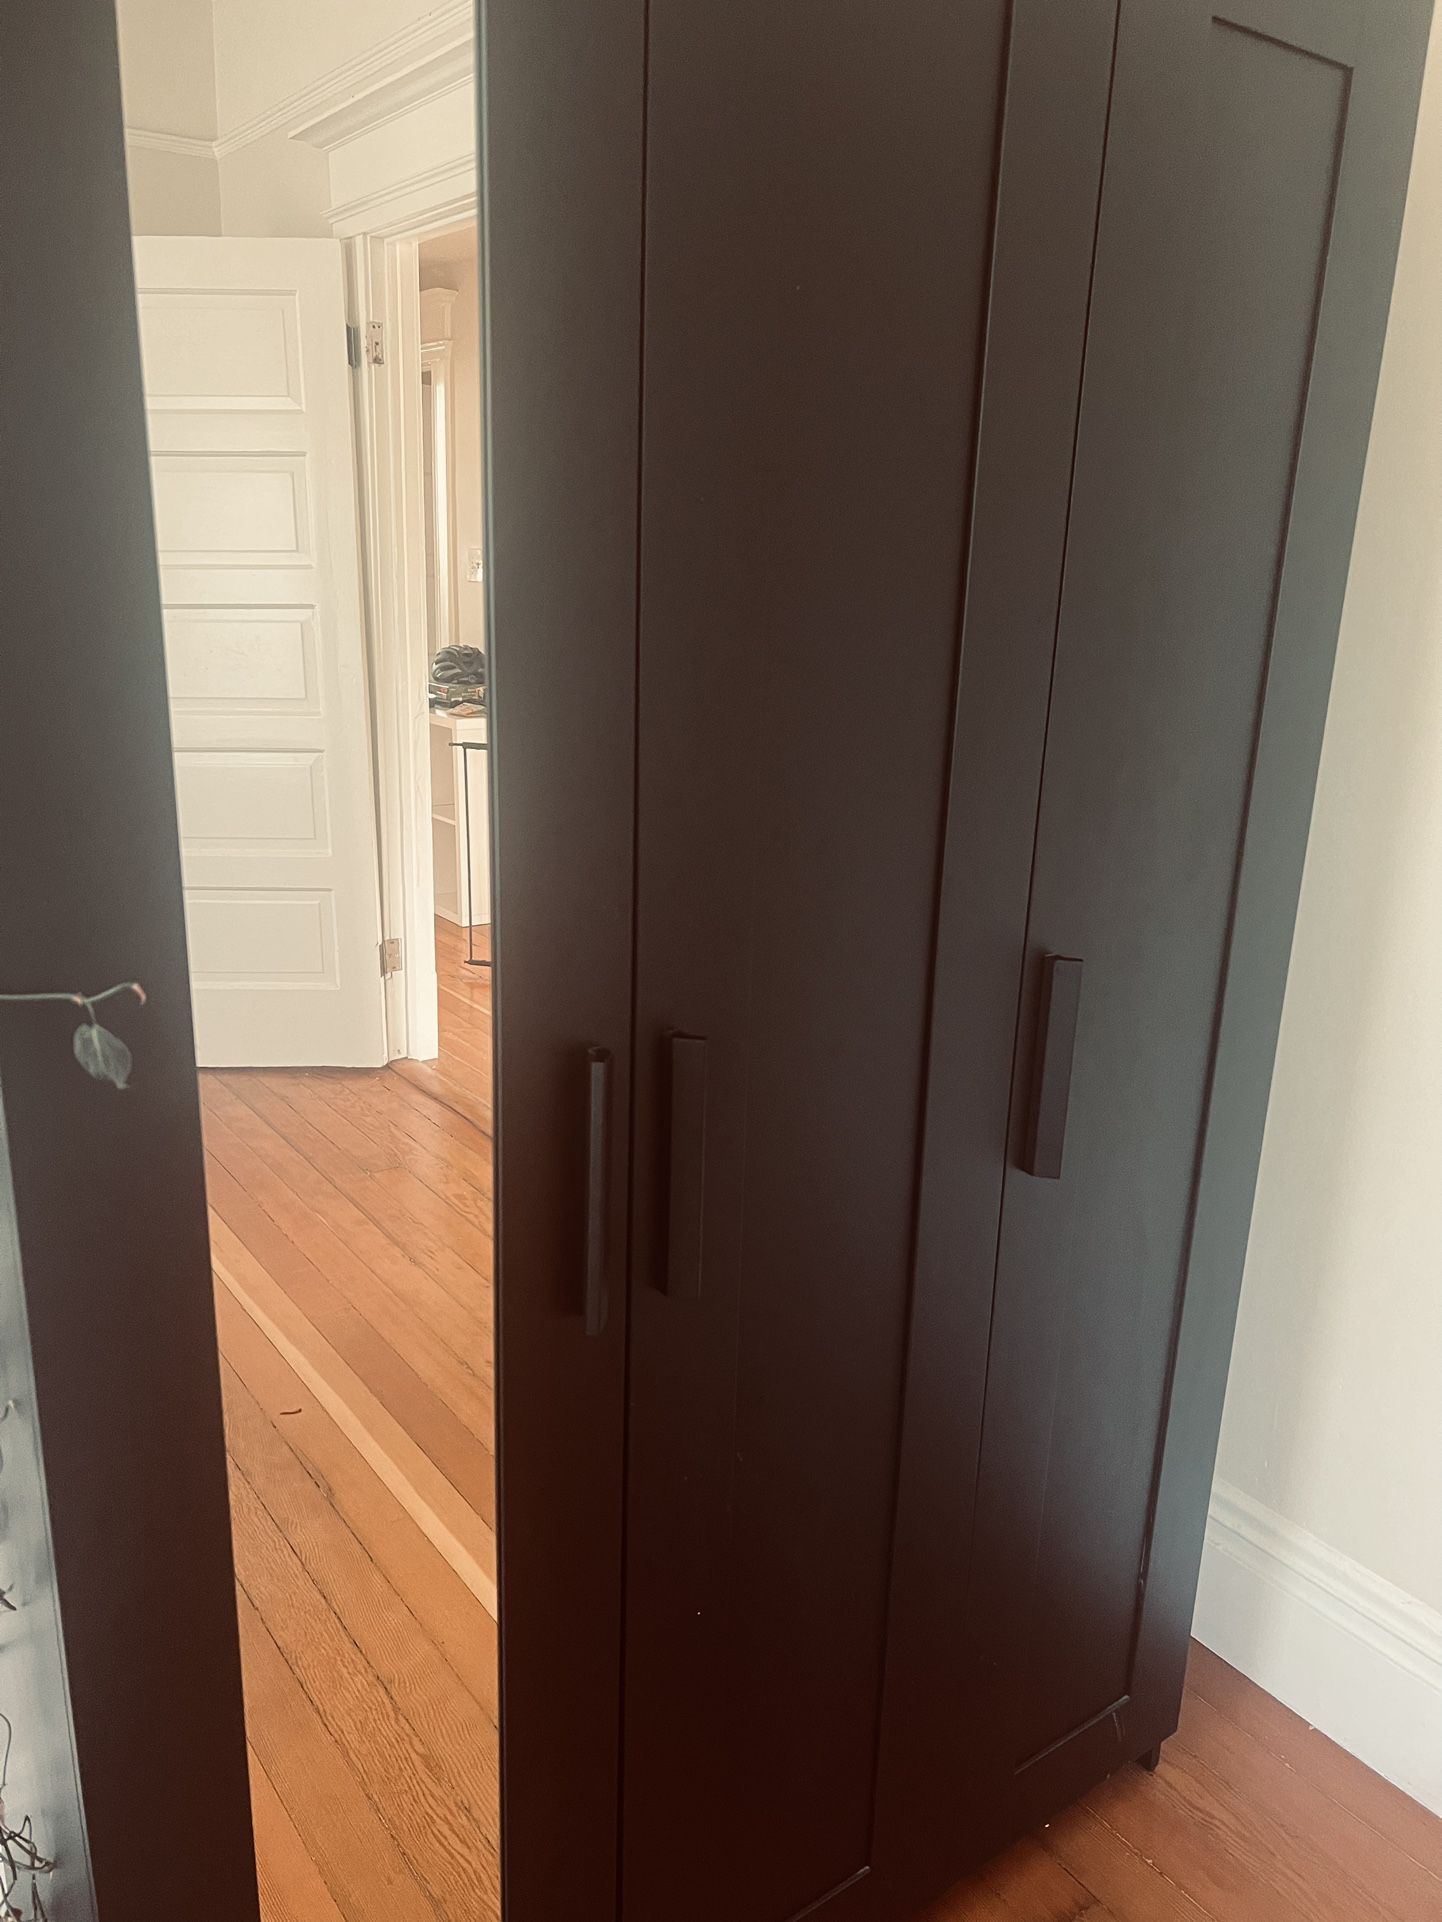 Clothes Cabinet 3 Door With mirror 